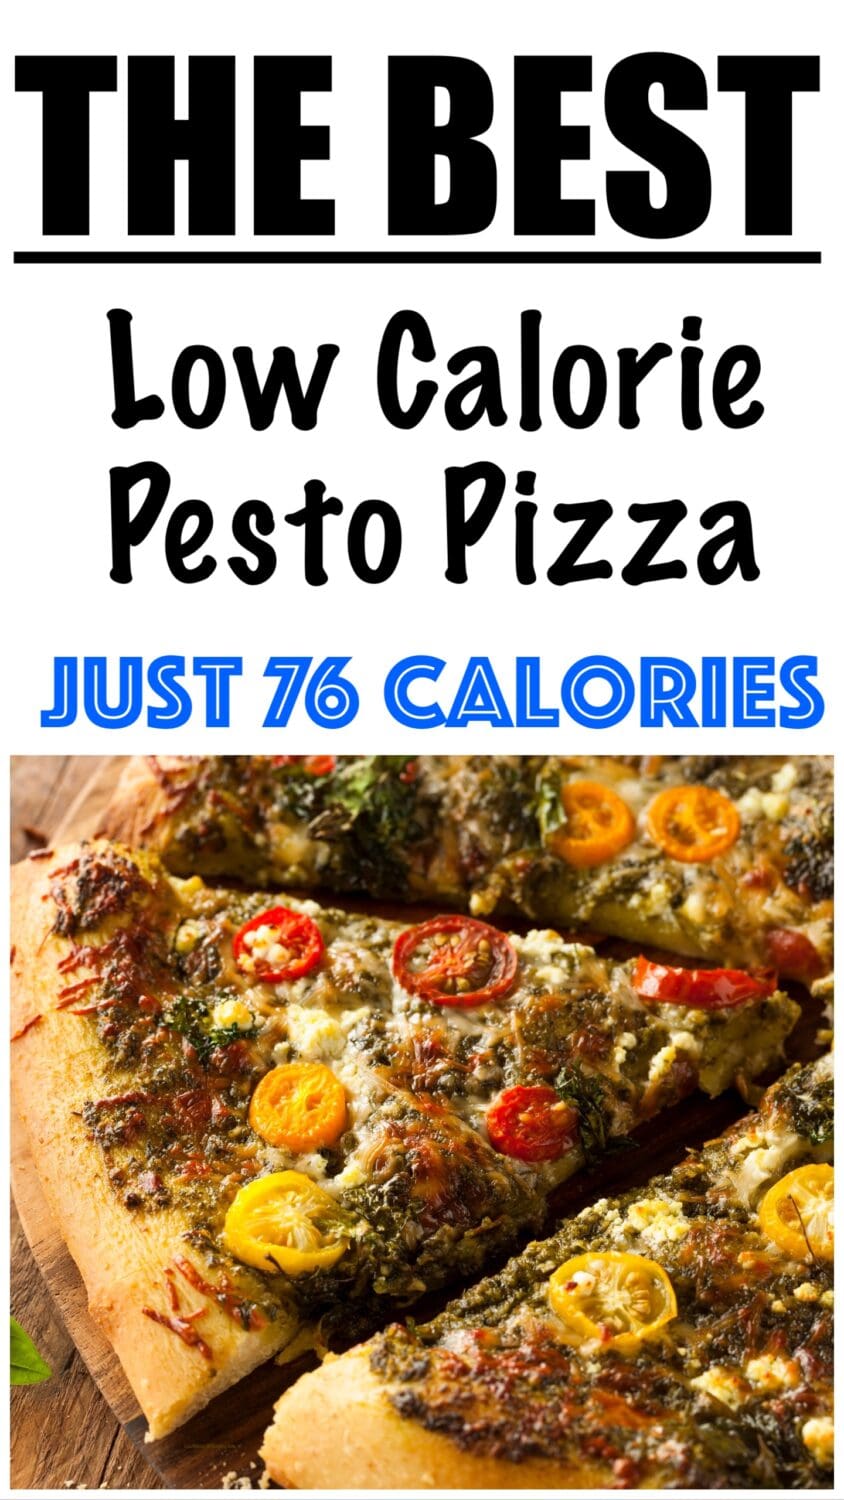 Low Calorie Pesto Pizza Recipe